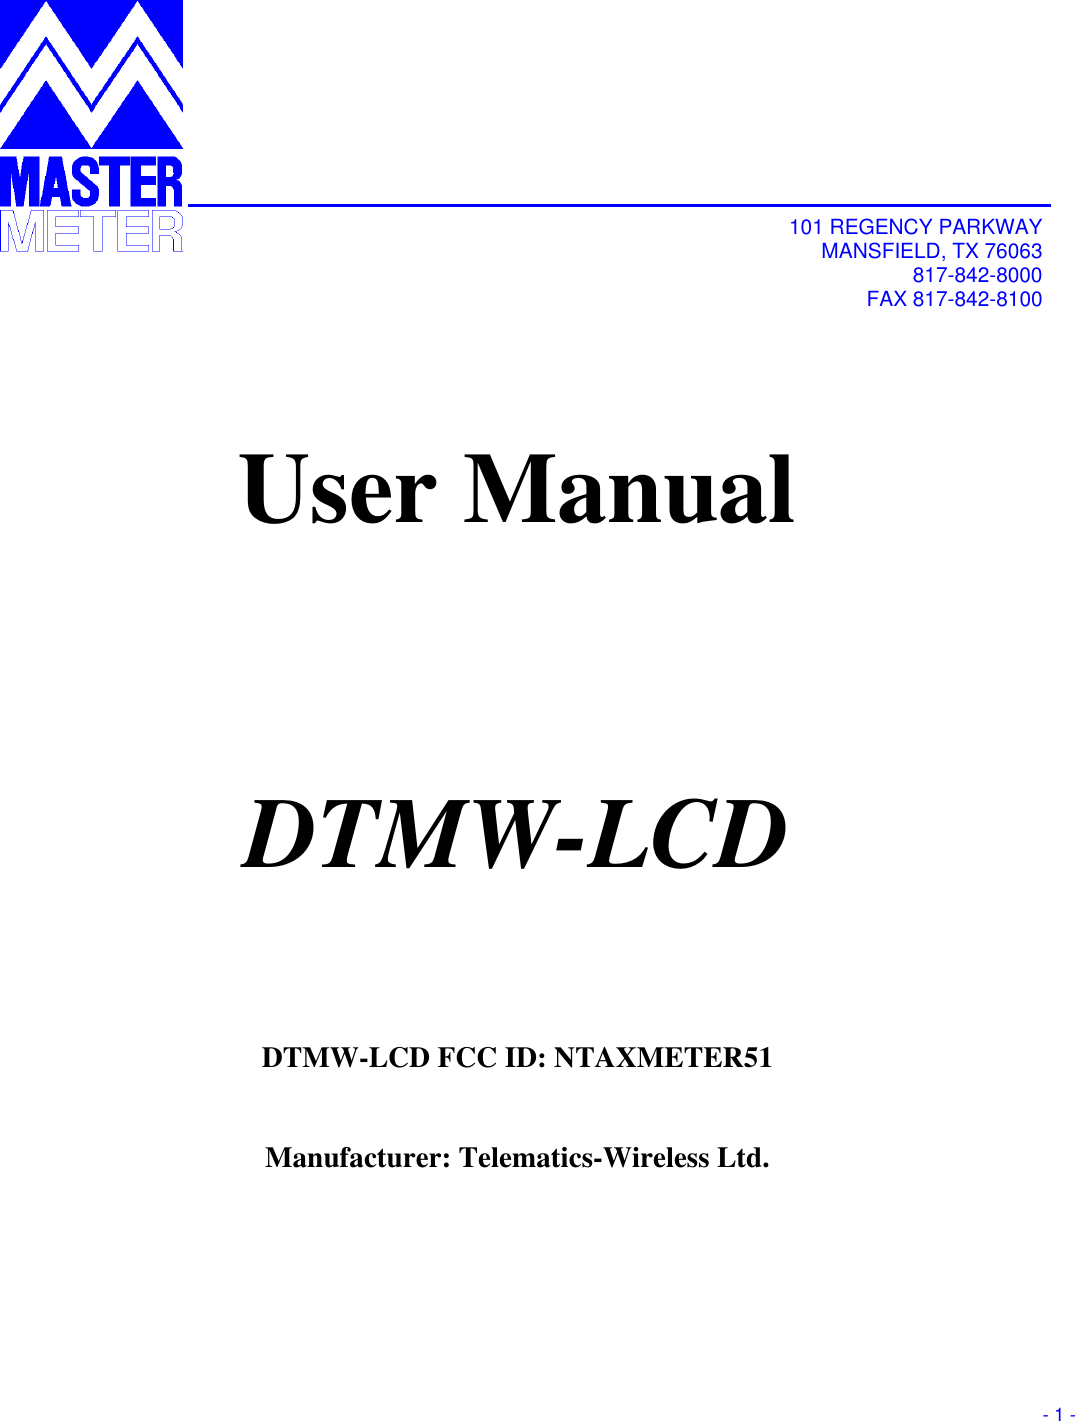       - 1 -               101 REGENCY PARKWAY MANSFIELD, TX 76063 817-842-8000 FAX 817-842-8100   User Manual  DTMW-LCD  DTMW-LCD FCC ID: NTAXMETER51  Manufacturer: Telematics-Wireless Ltd.       